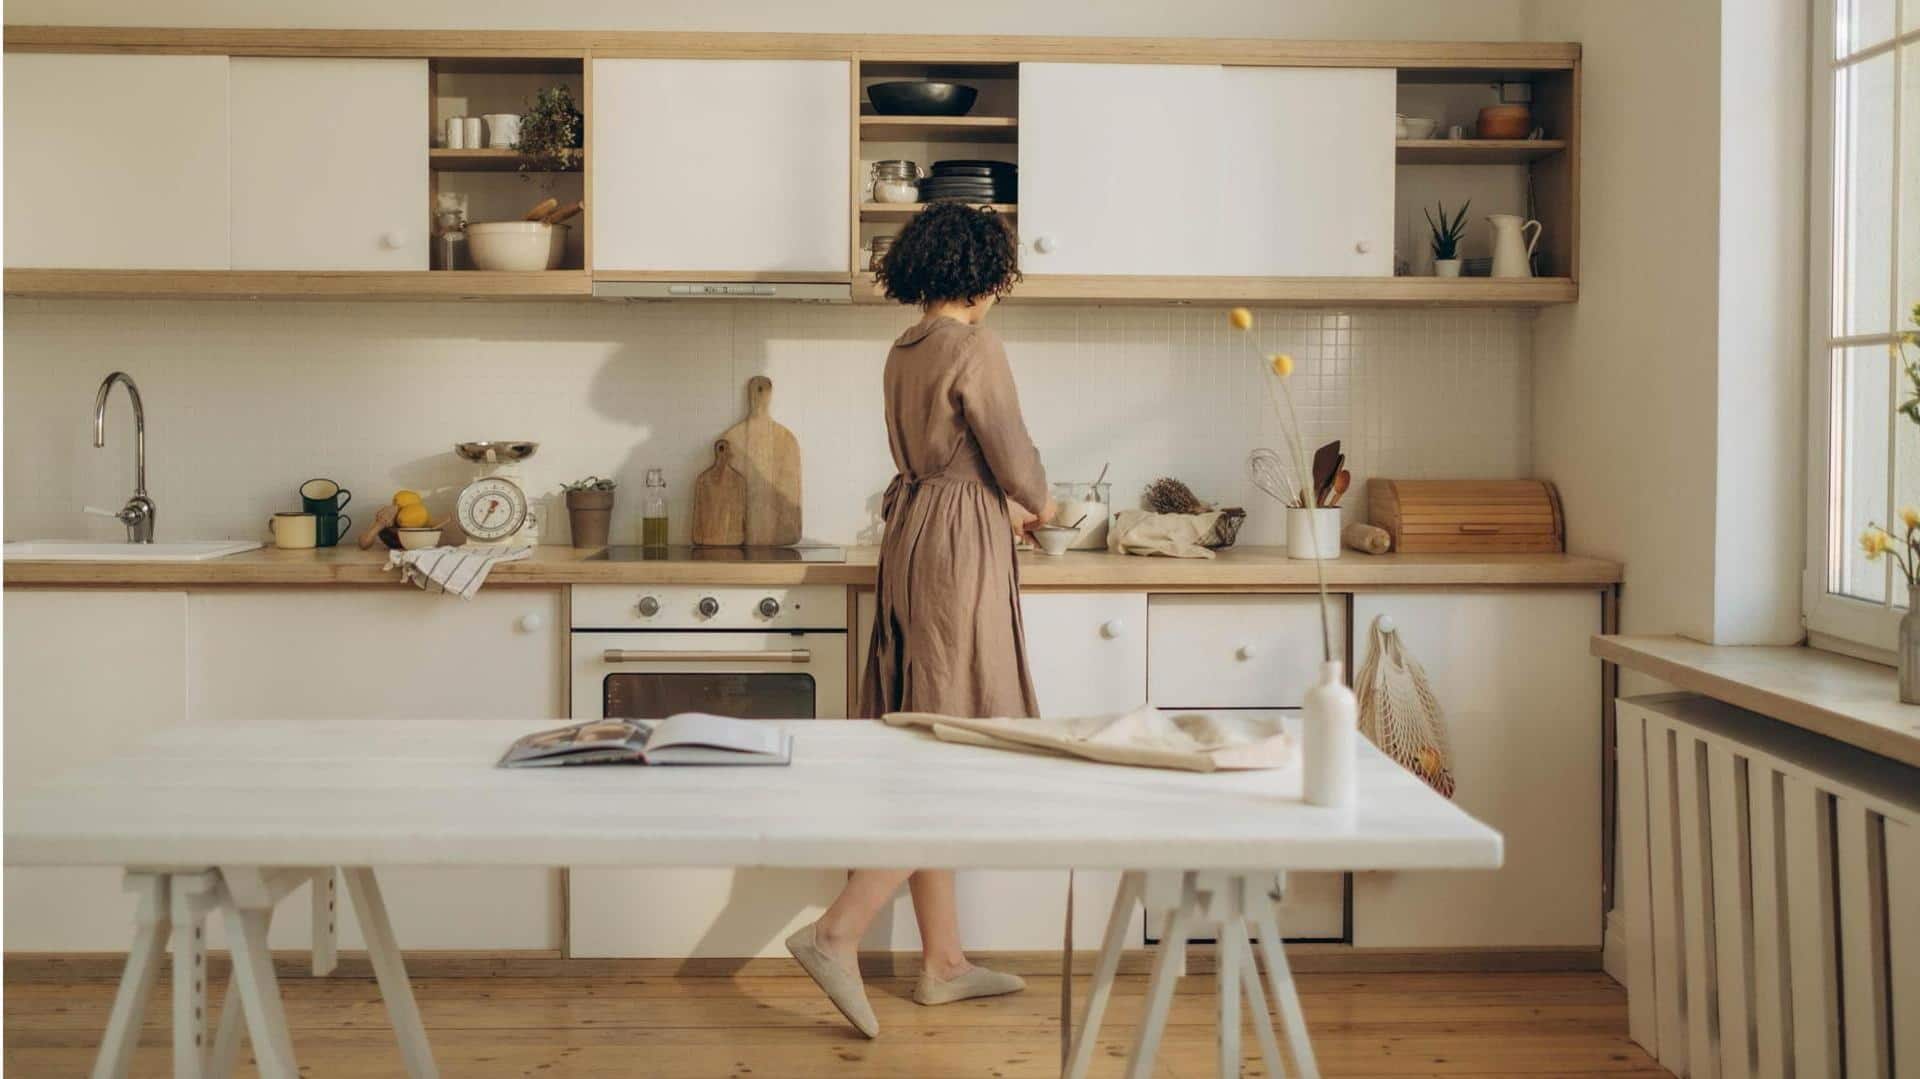 Cobalah desain dapur minimalis khas Skandinavia ini